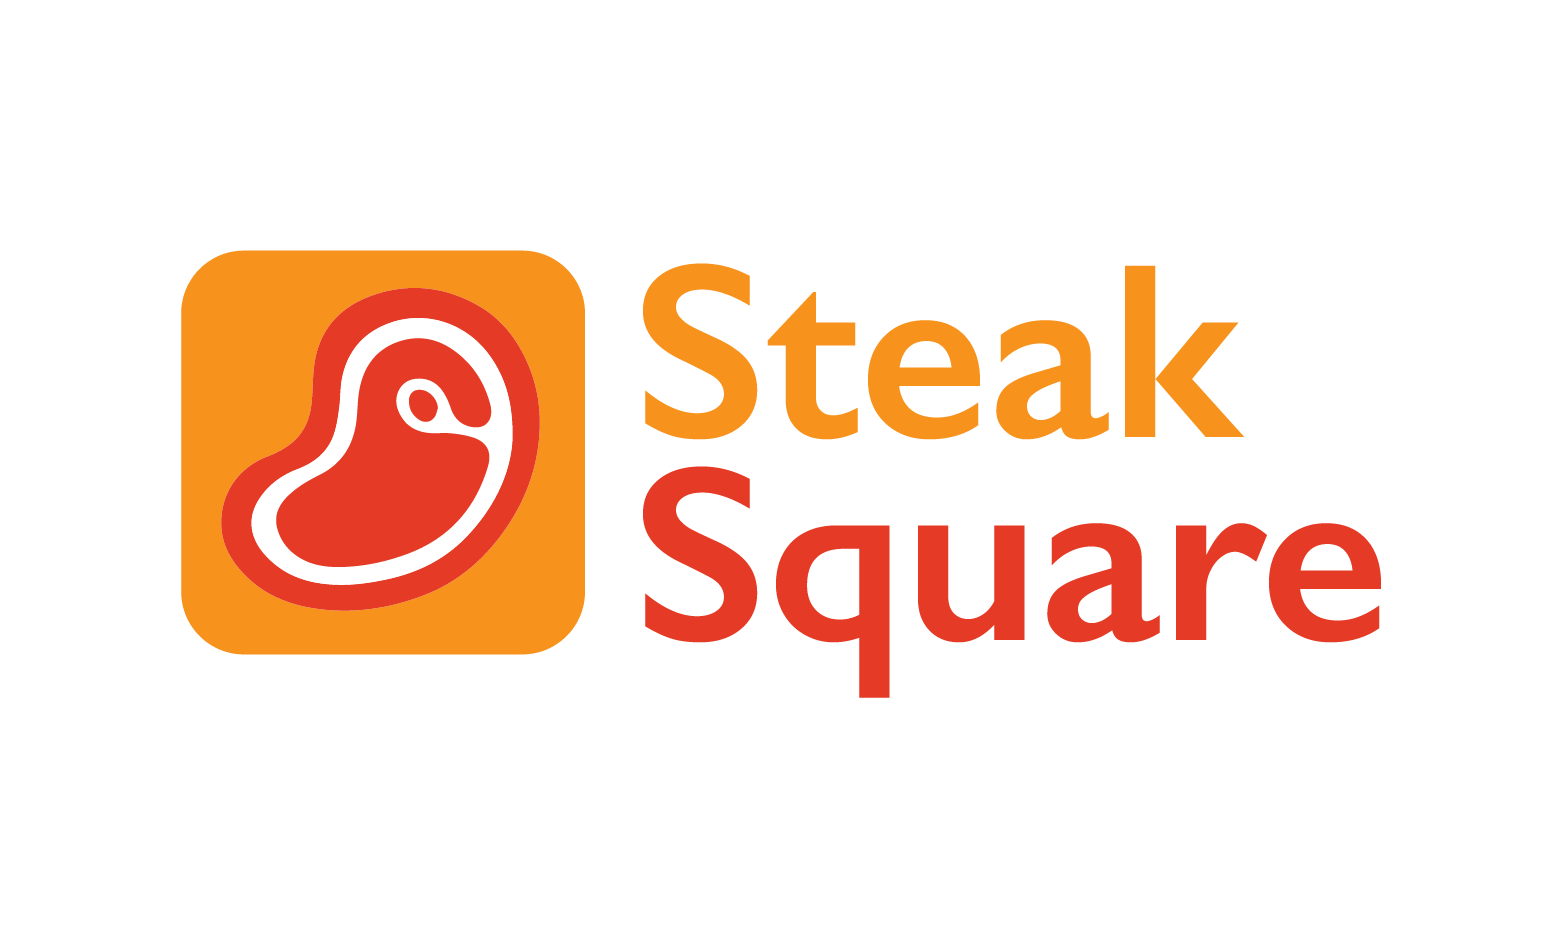 SteakSquare.com - Creative brandable domain for sale